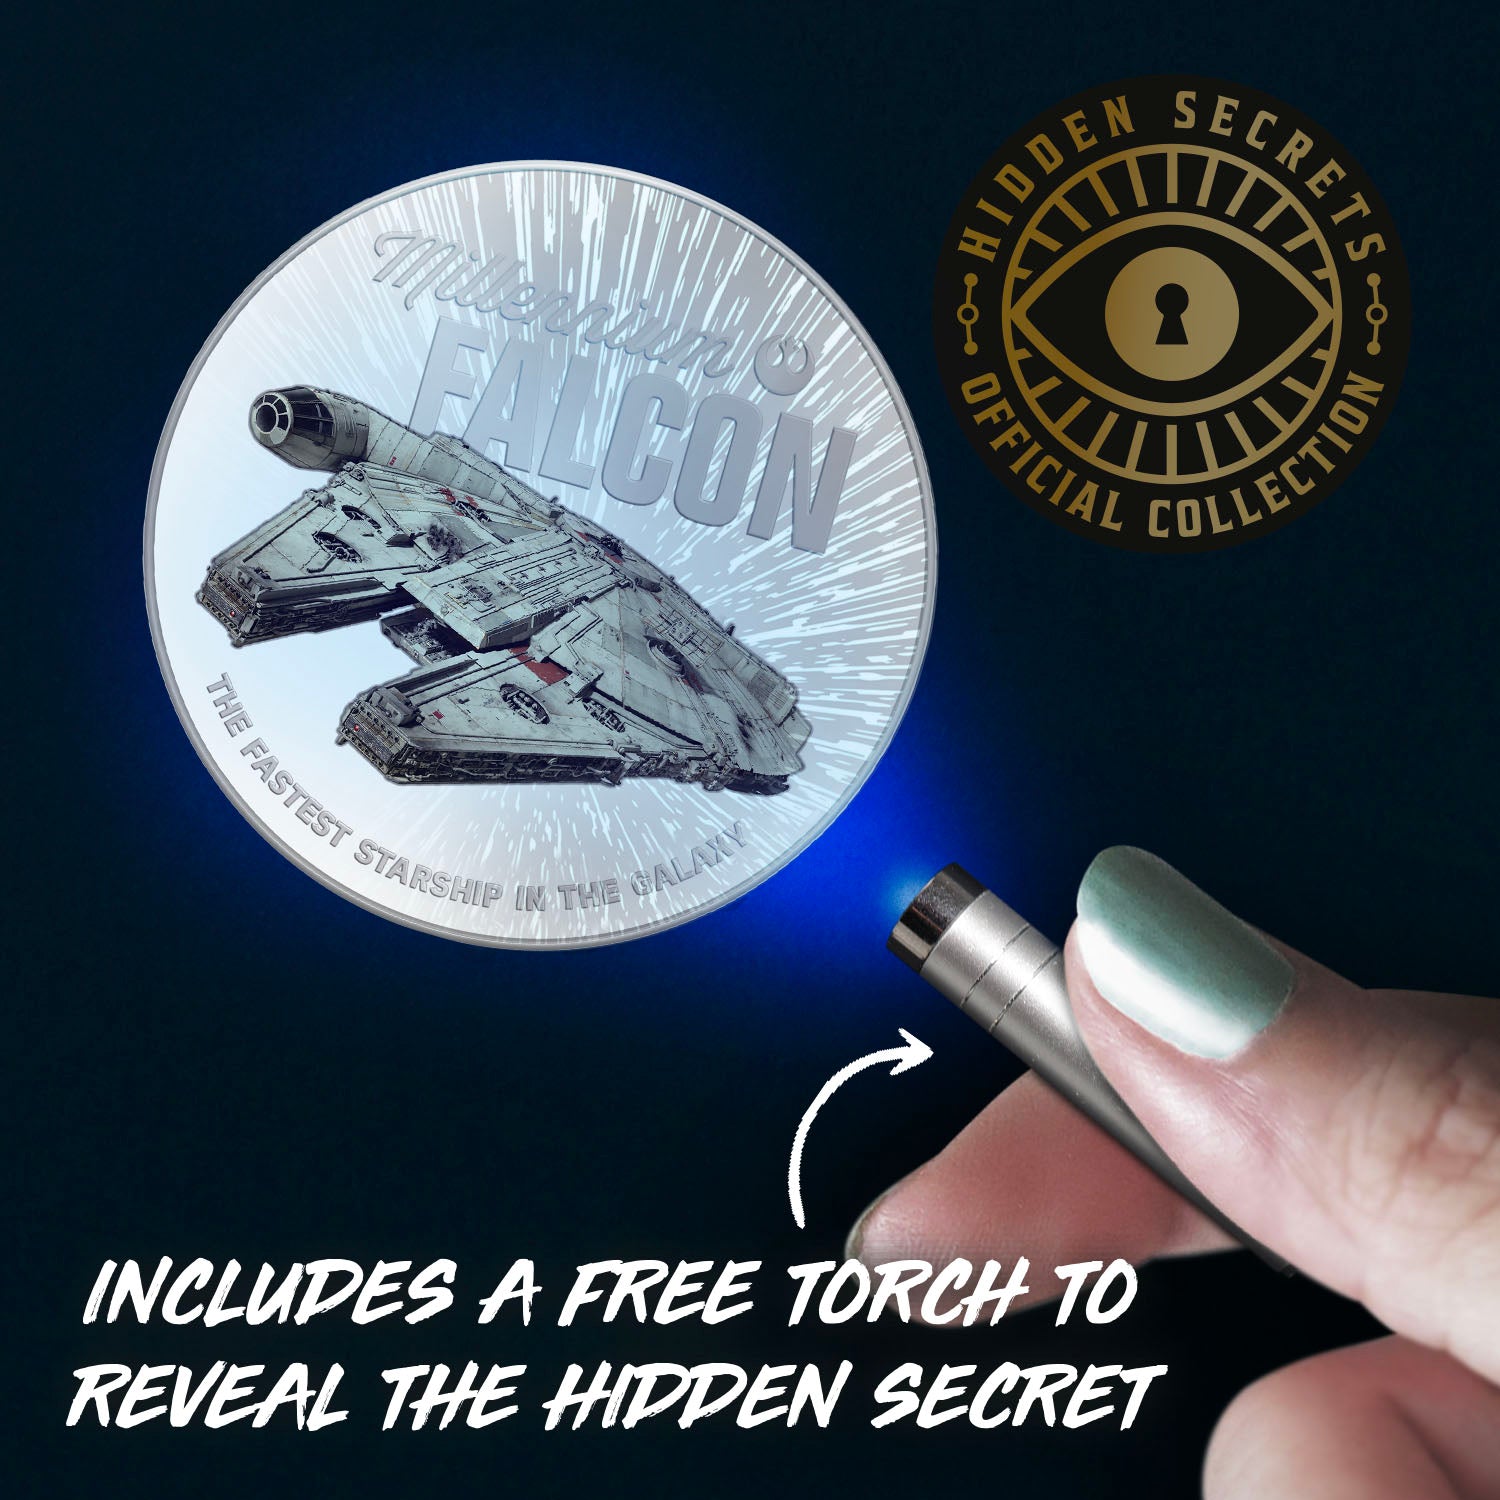 The Hidden Secret Official Star Wars Millennium Falcon Commemorative